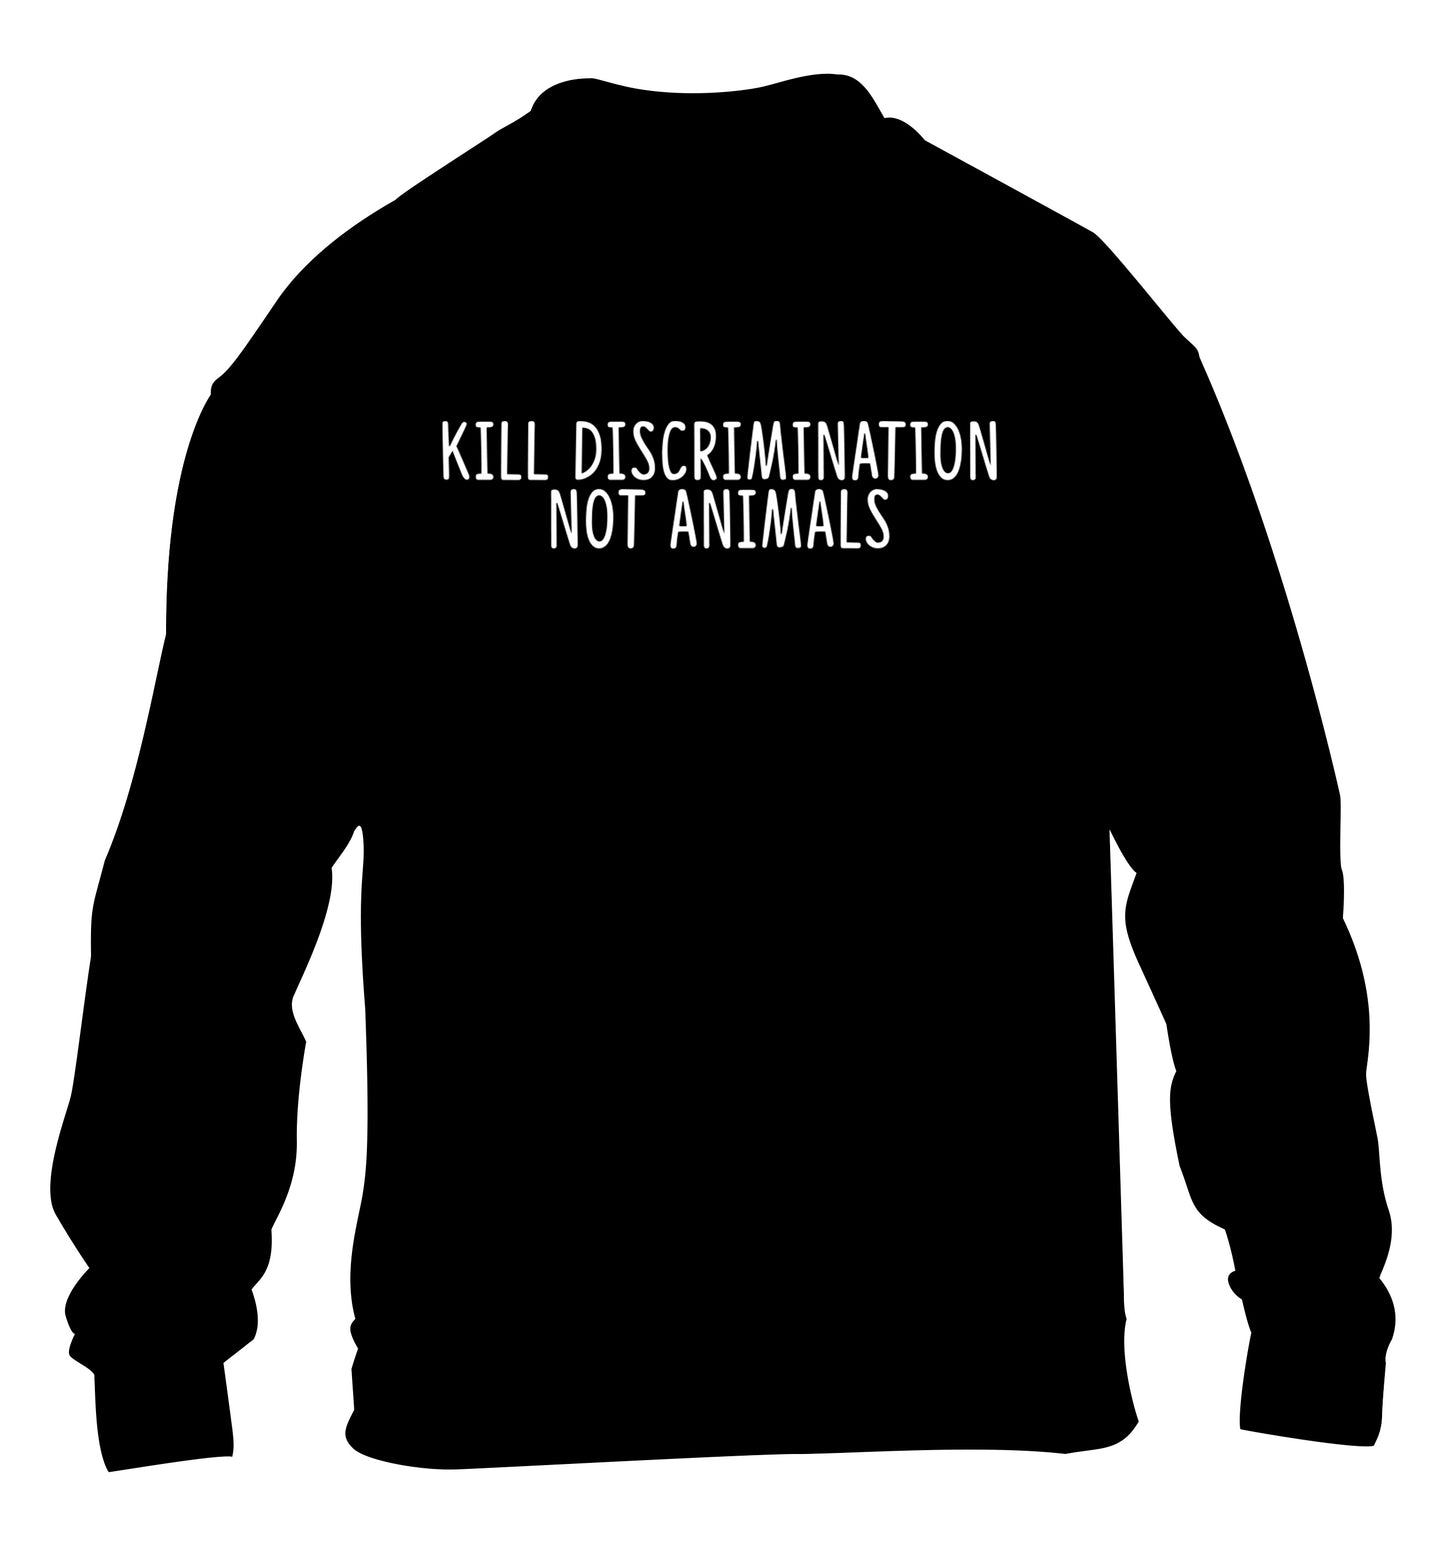 Kill Discrimination Not Animals children's black sweater 12-13 Years